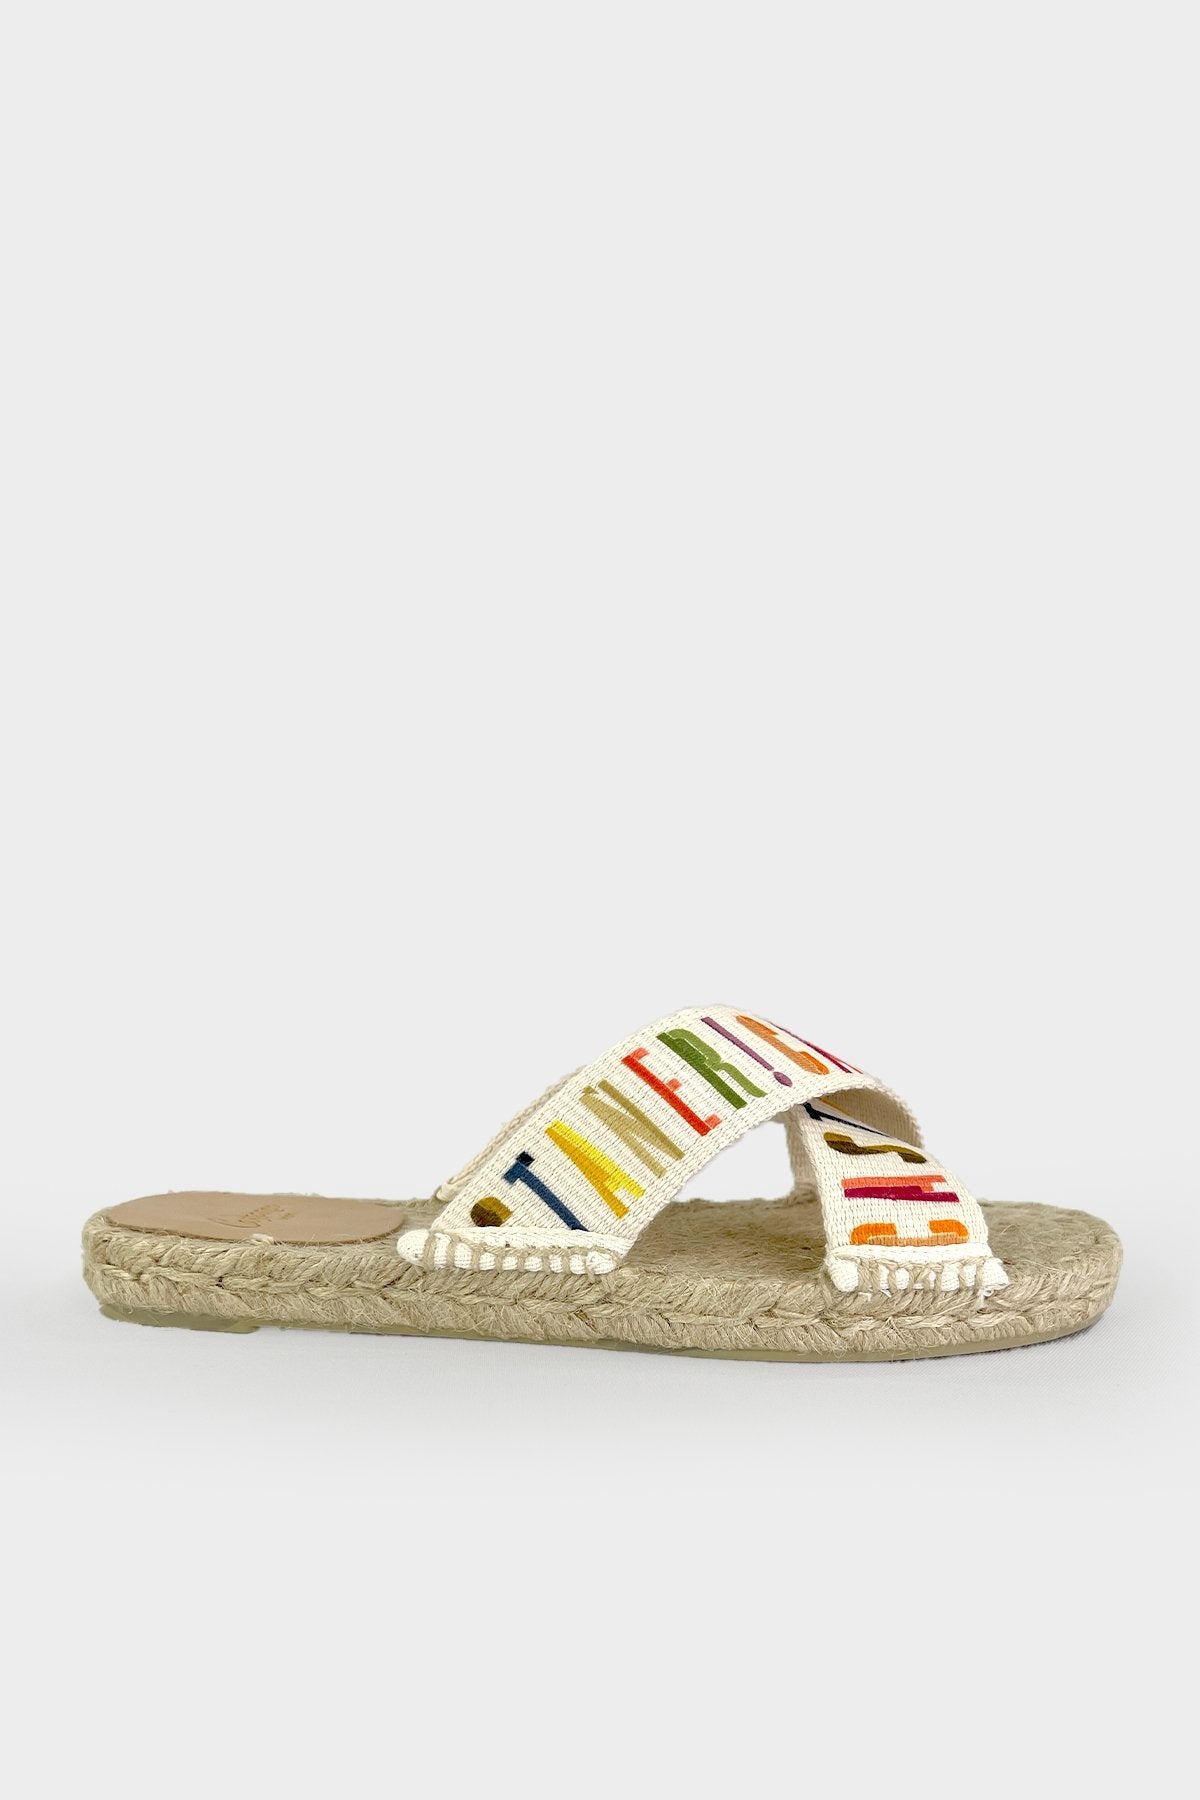 Palmita Flat Sandals in Blanco/Multi - shop-olivia.com